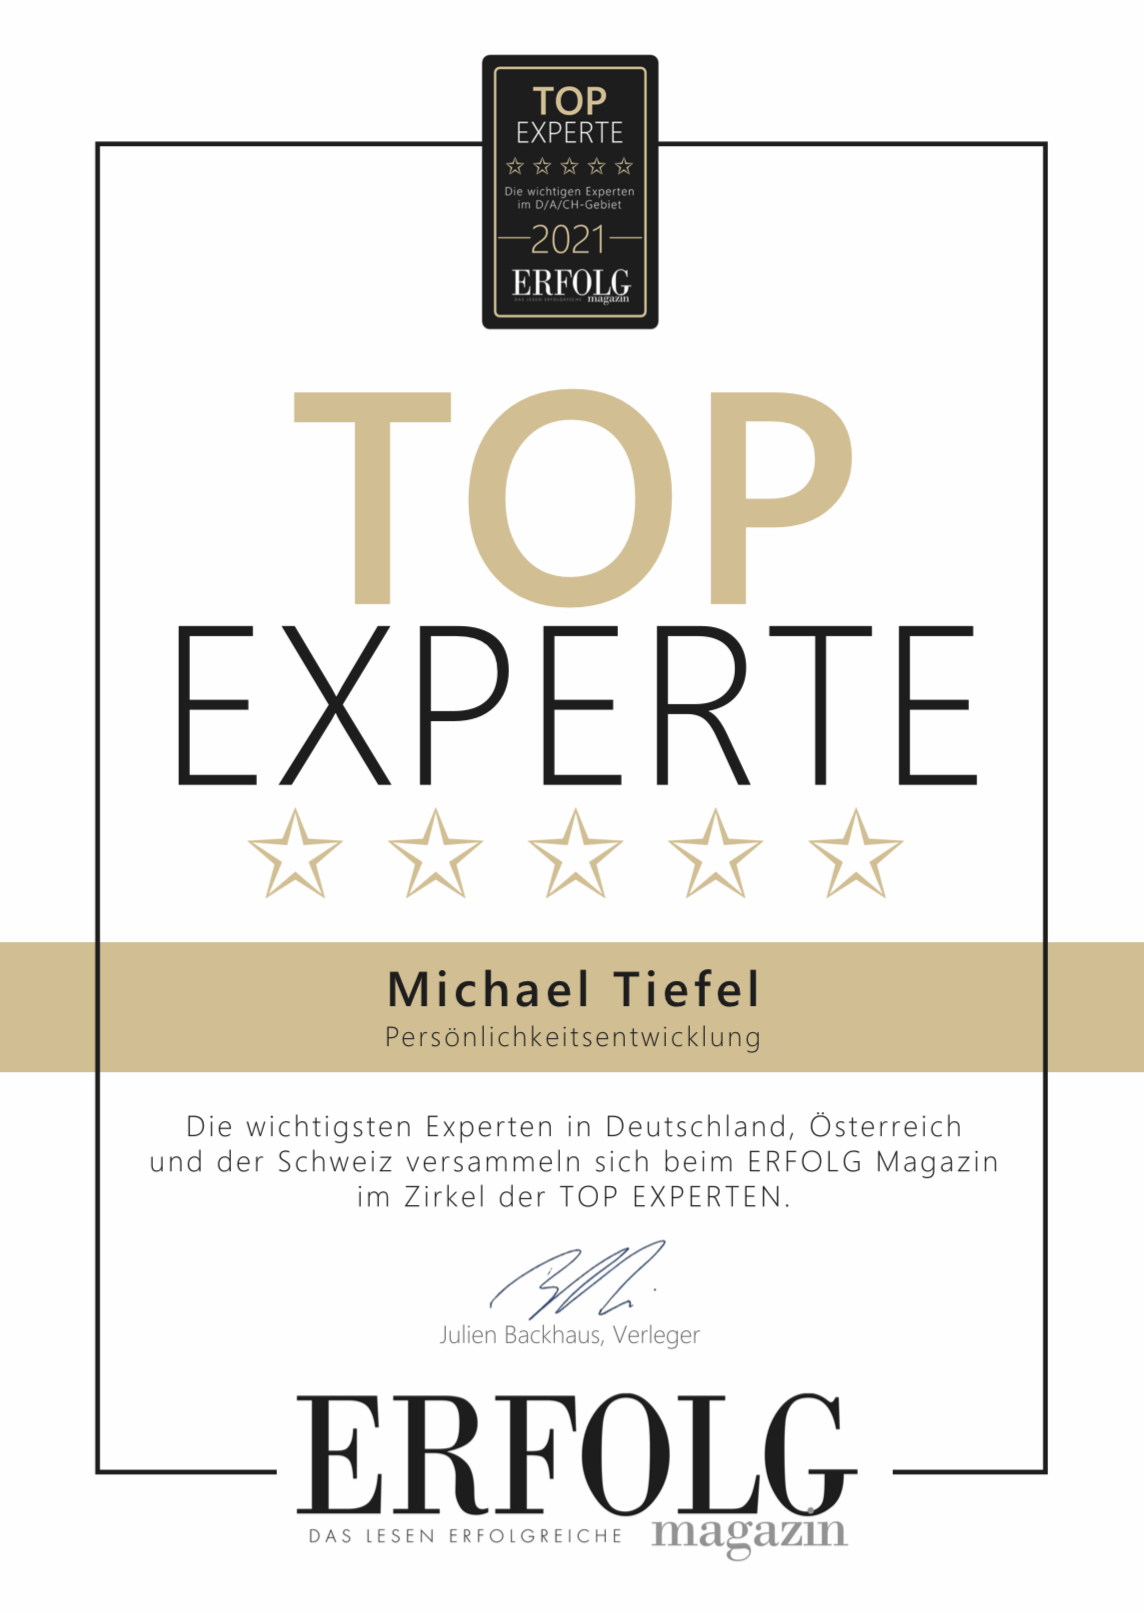 Expert Marketplace - Michael Tiefel - Impressionen 0